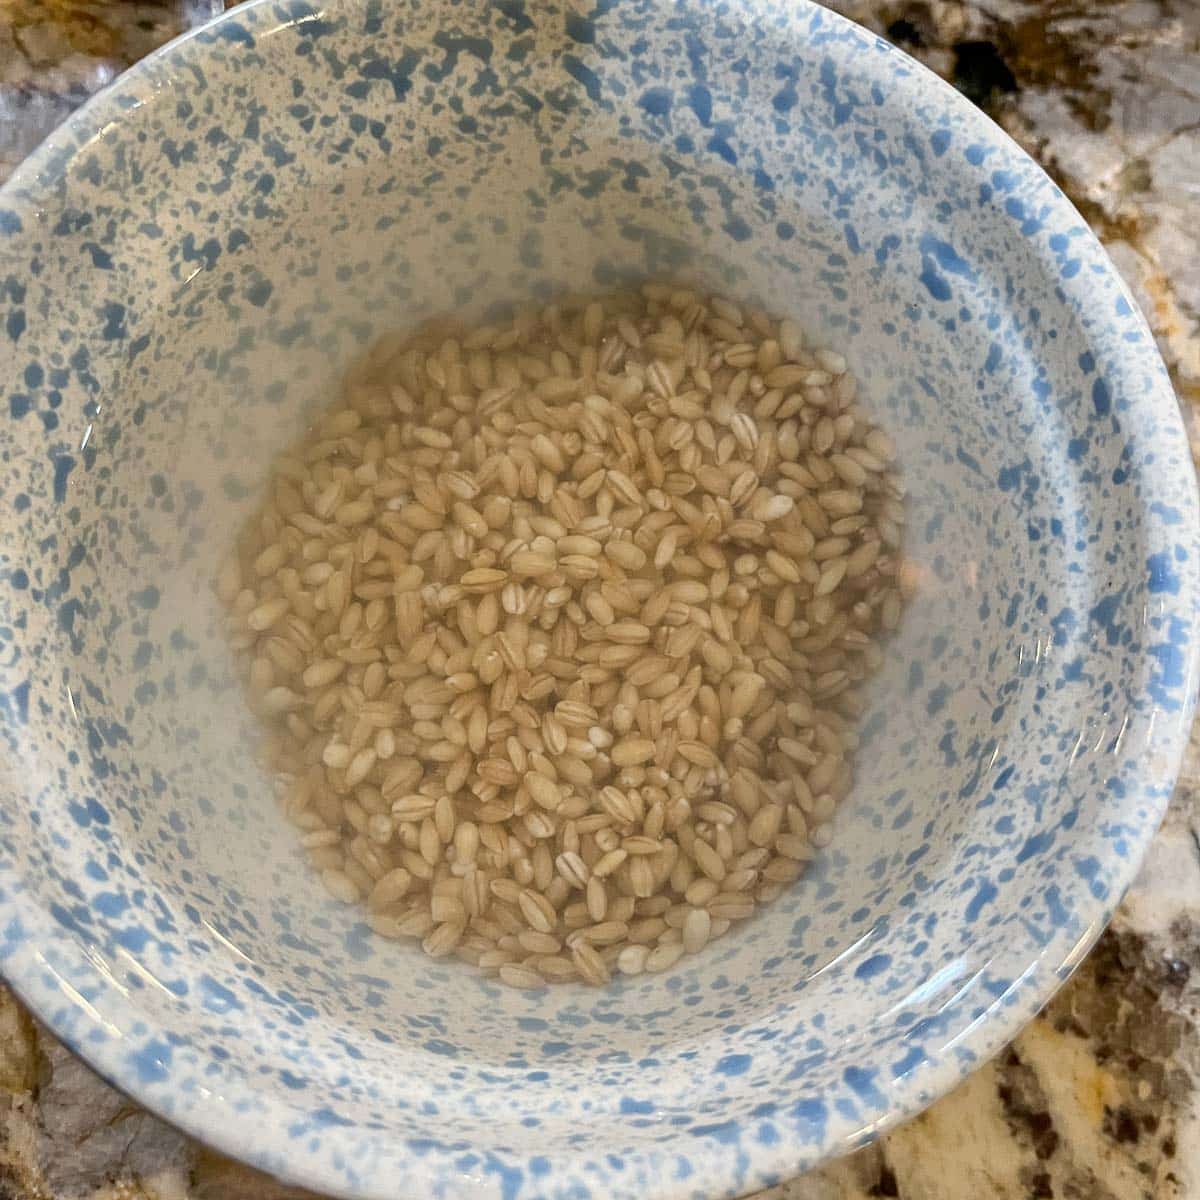 barley soaking in water